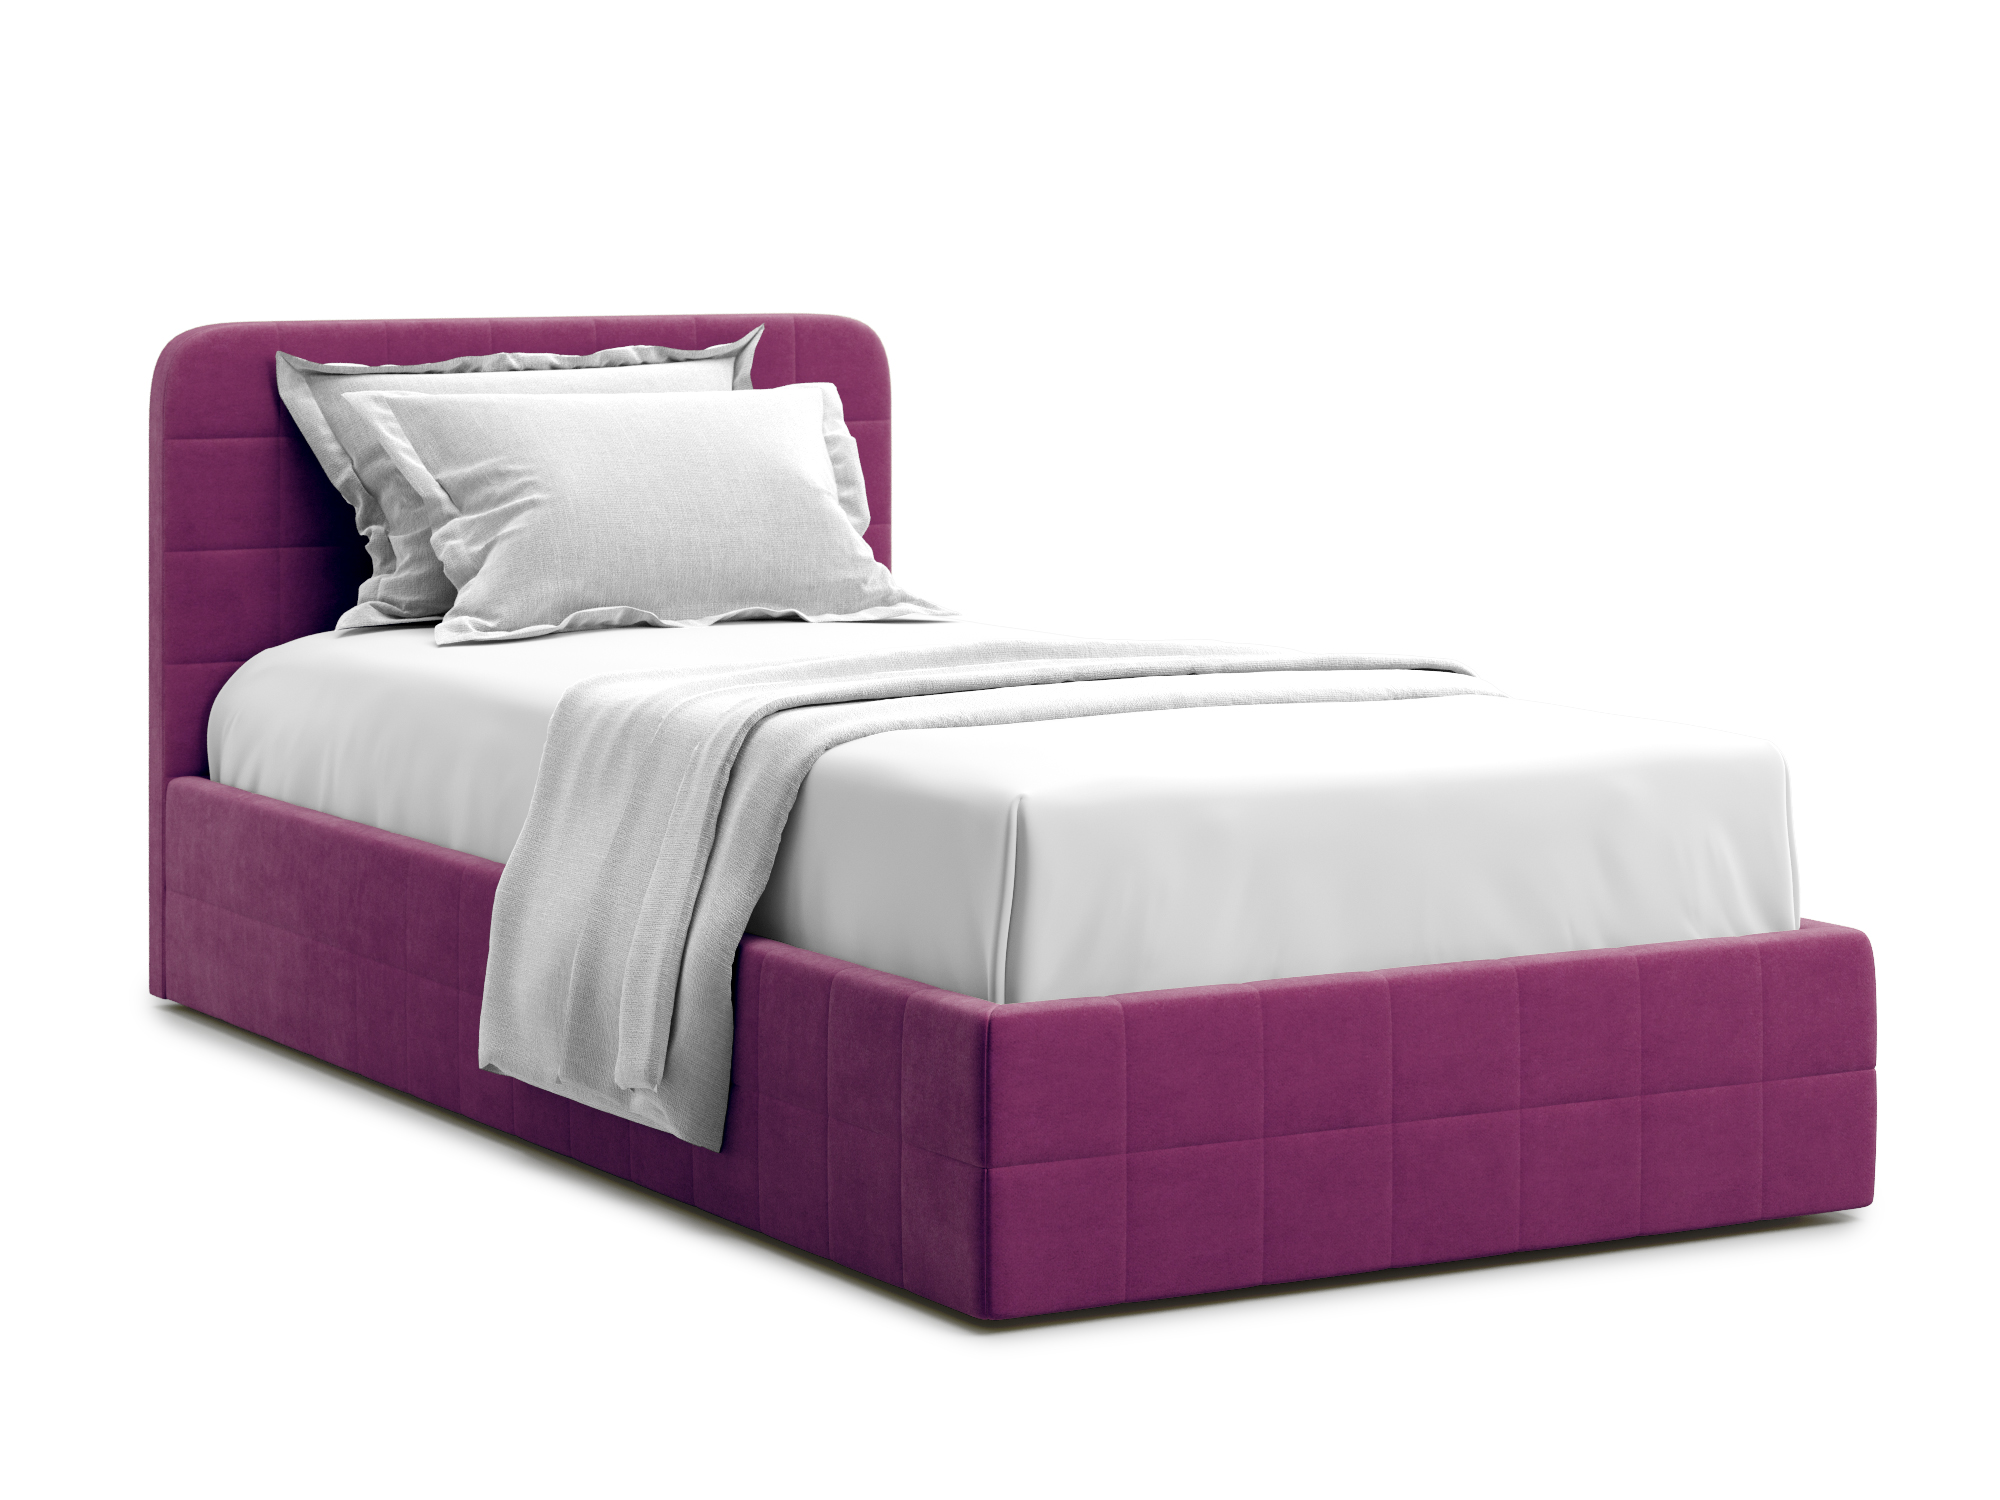 Кровать Adda 120 Velutto 15 Фиолетовый, Массив, ДСП кровать adda 90 velutto 26 синий массив дсп